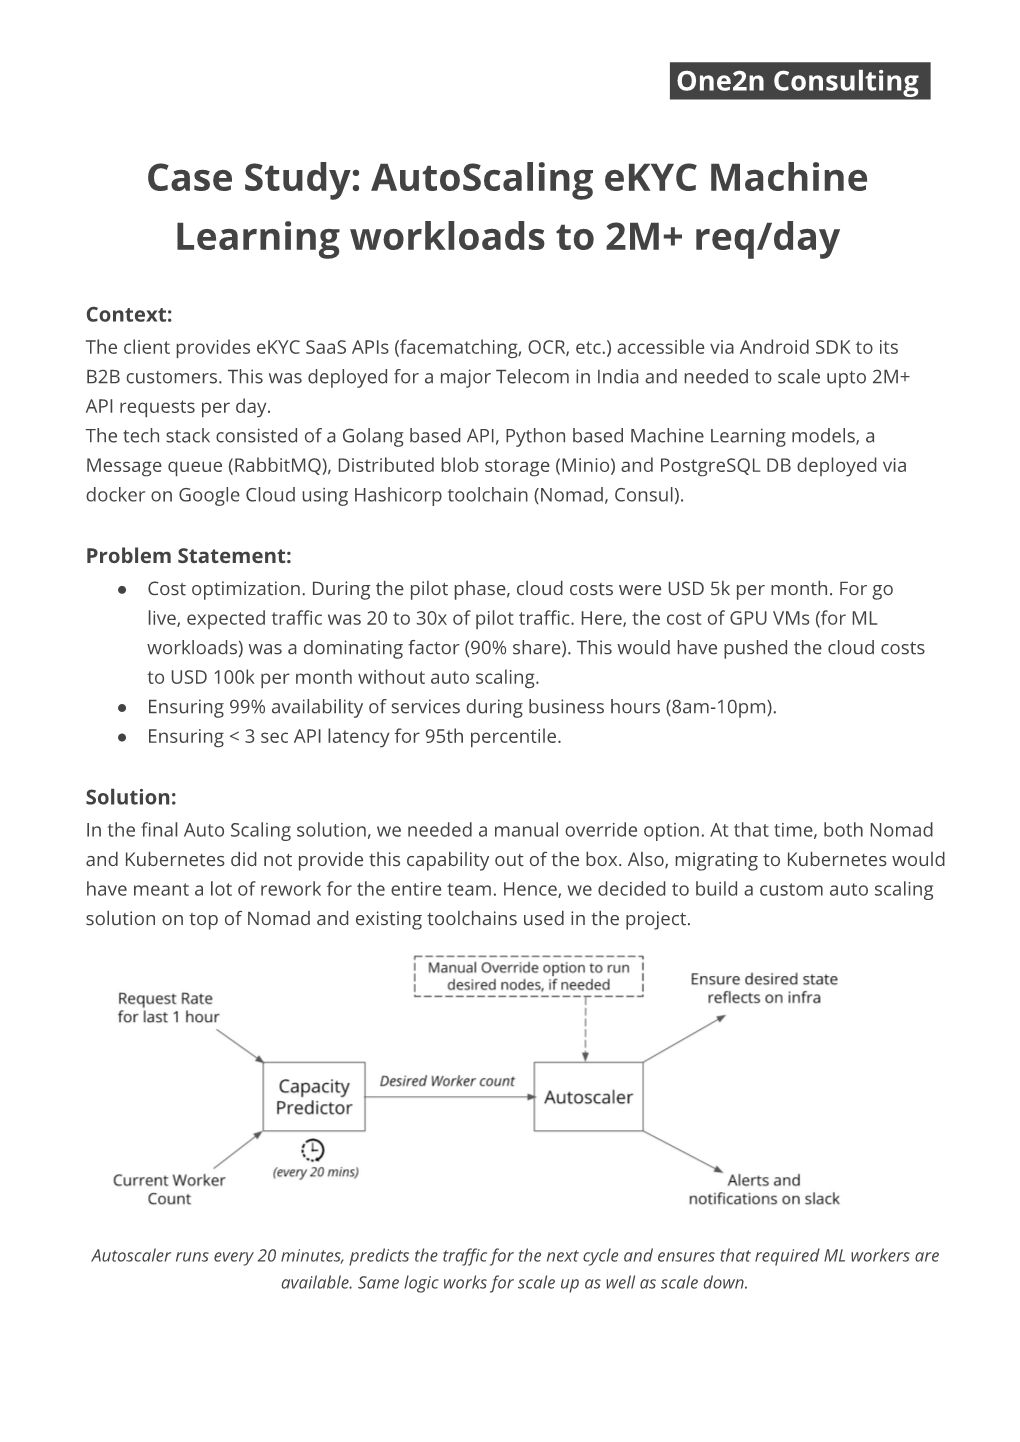 Autoscaling Ekyc Machine Learning Workloads to 2M+ Req/Day